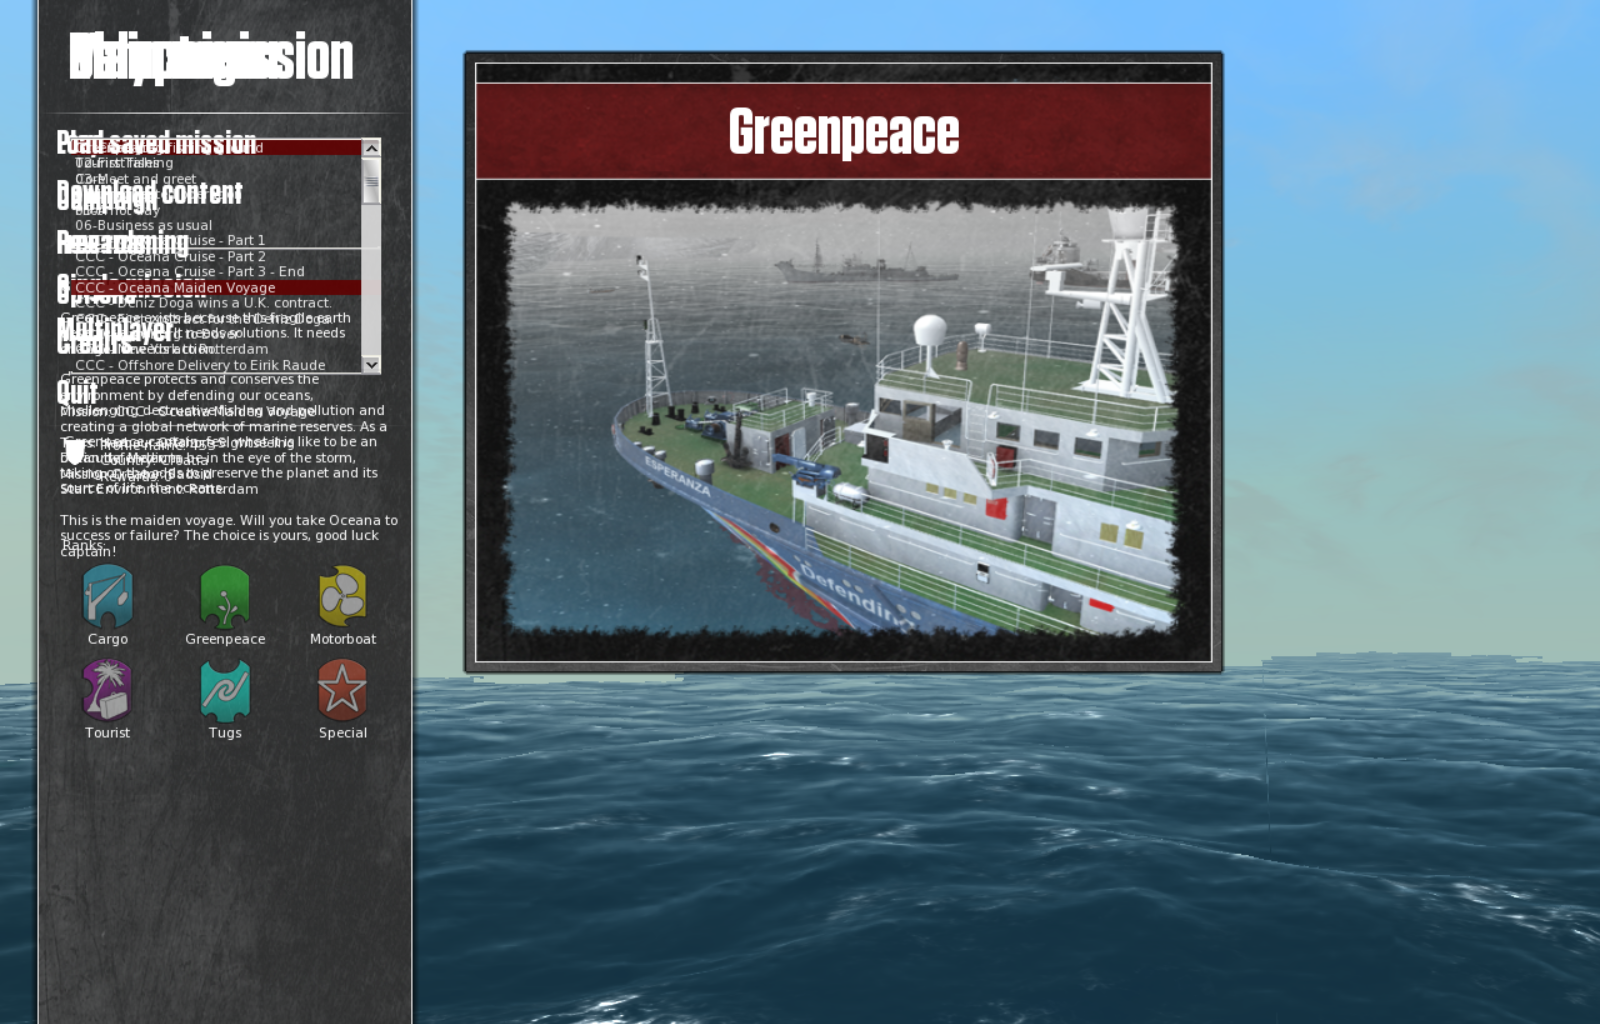 ship simulator extremes 2013 download